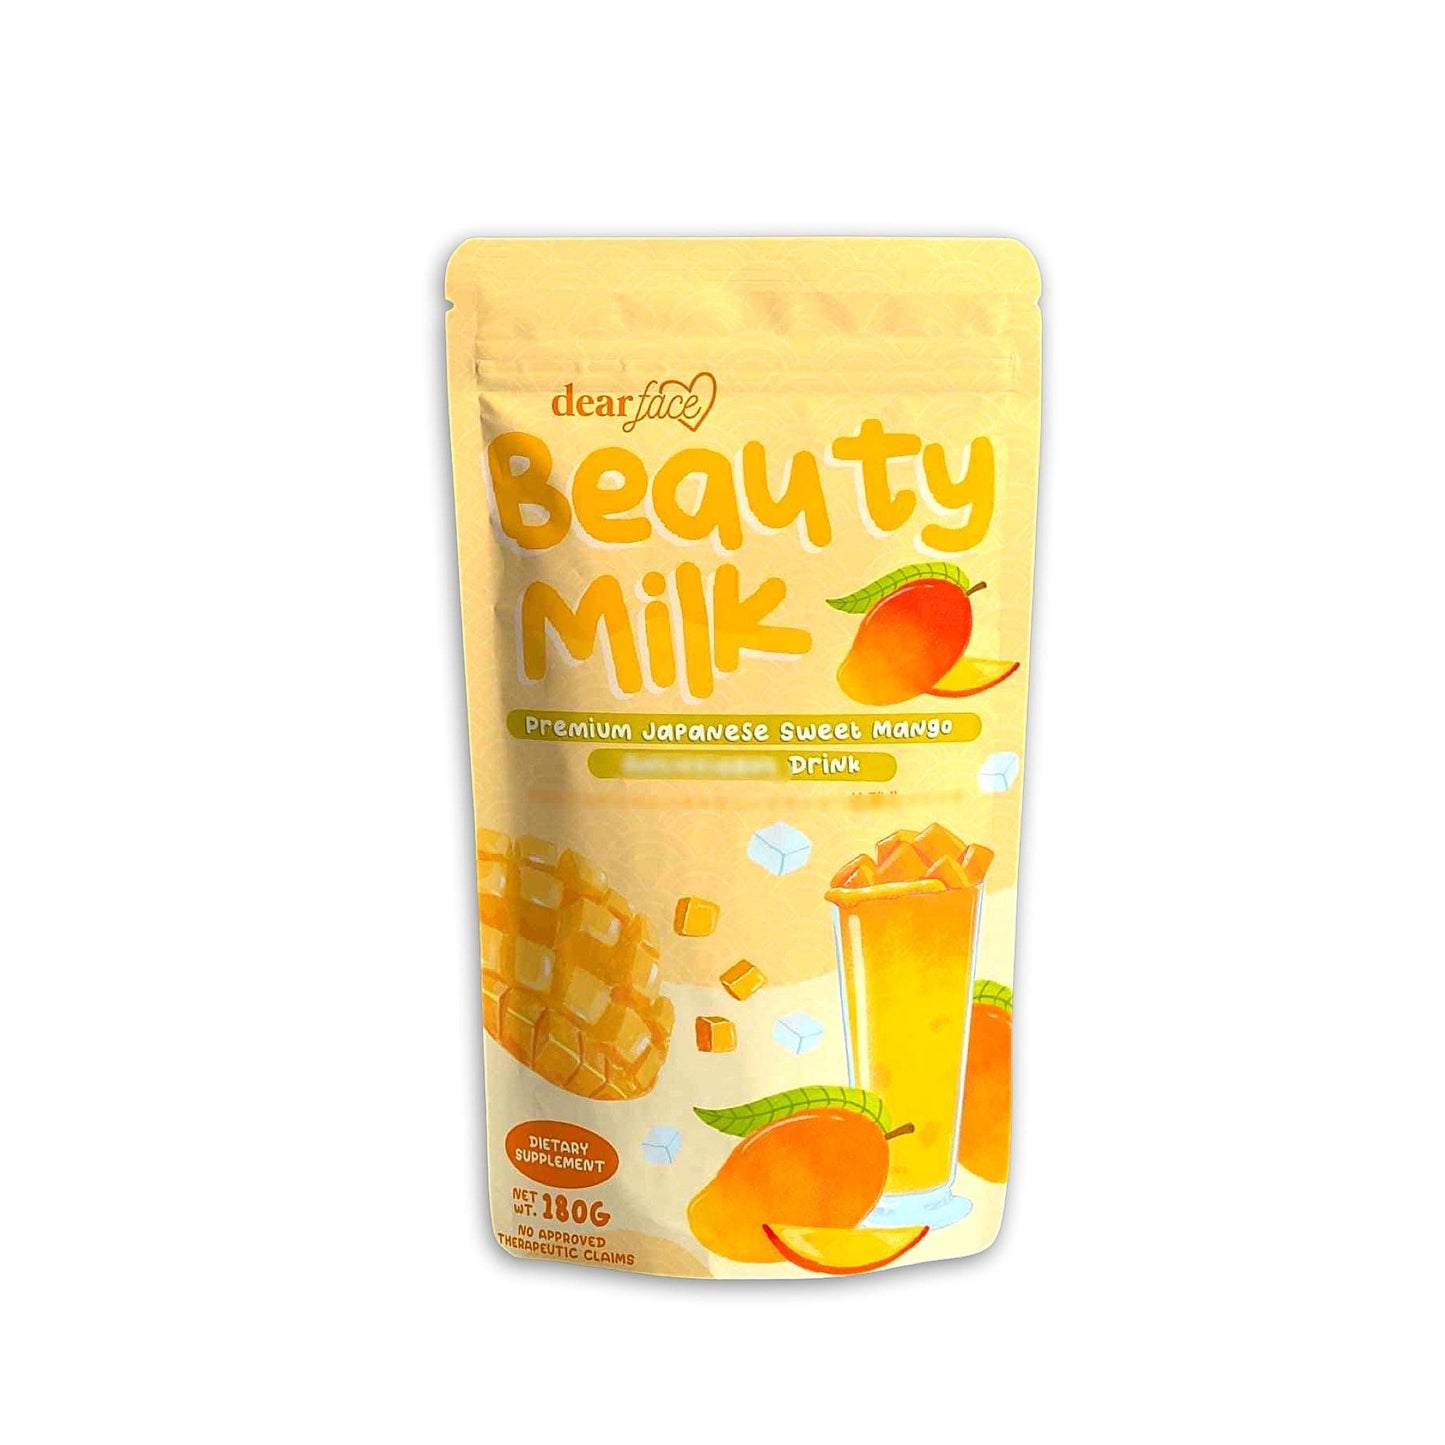 Dear Face Beauty Milk Mango